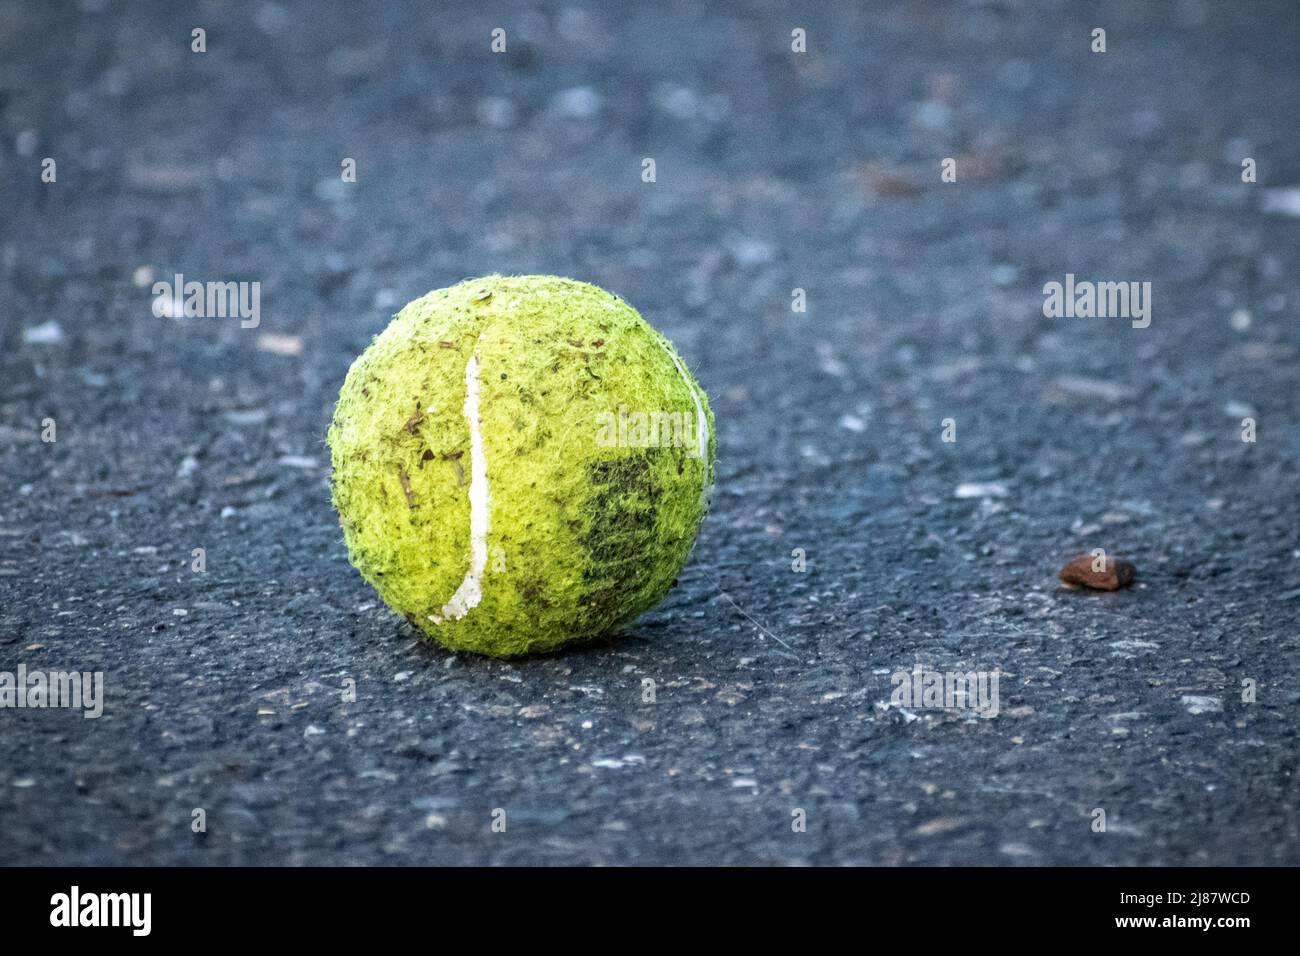 A dirty tennis ball. Stock Photo